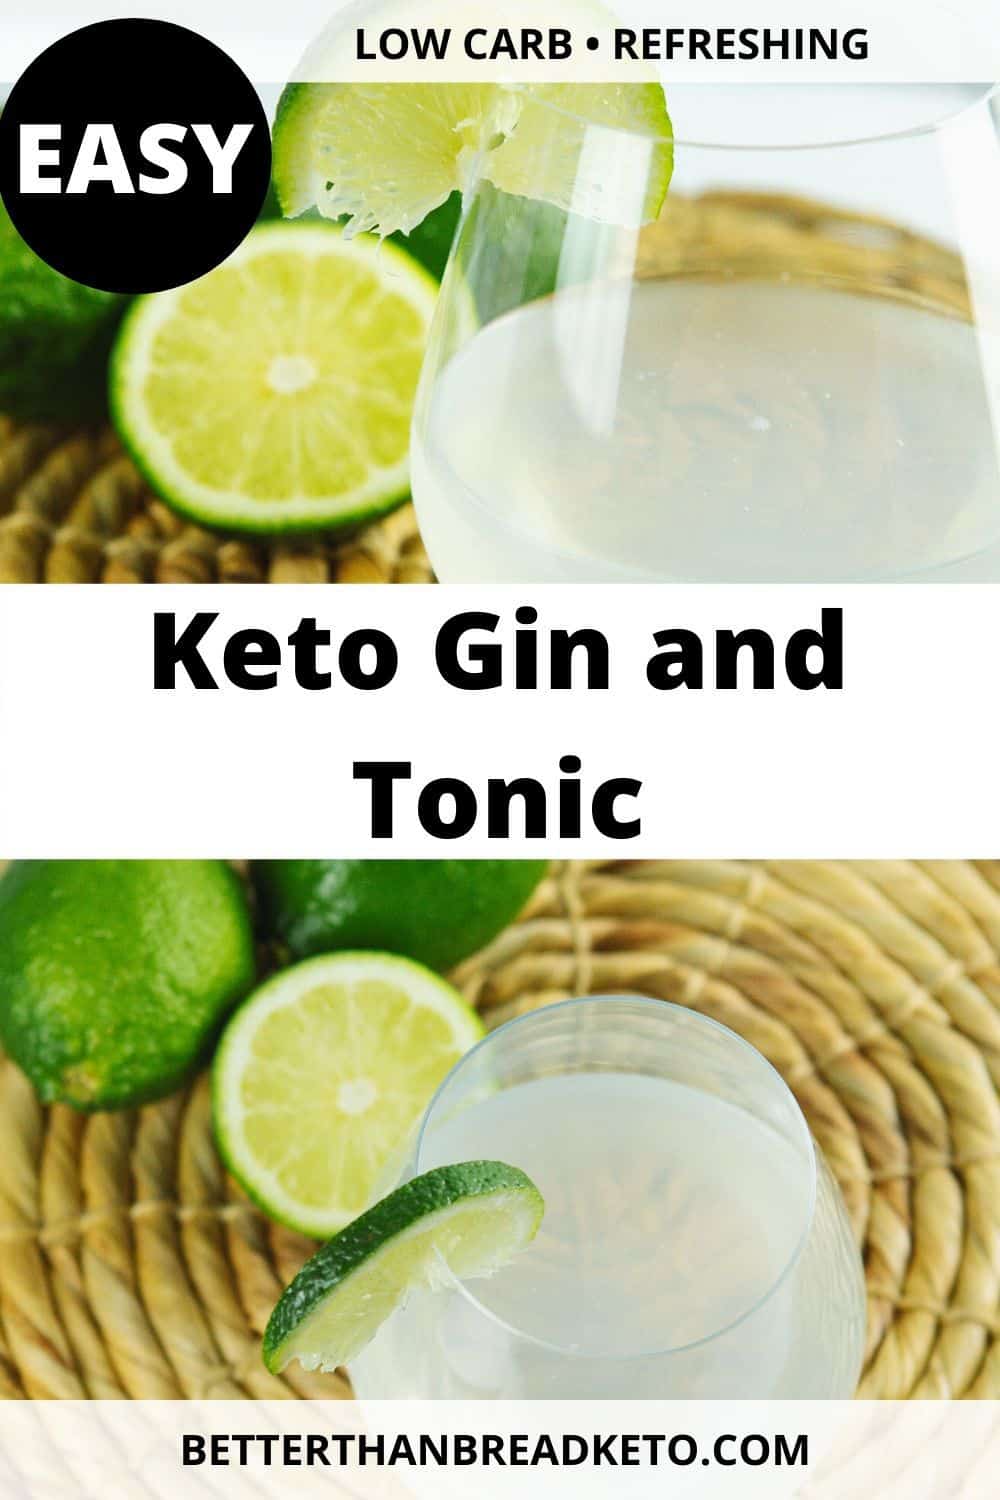 Keto Gin and Tonic